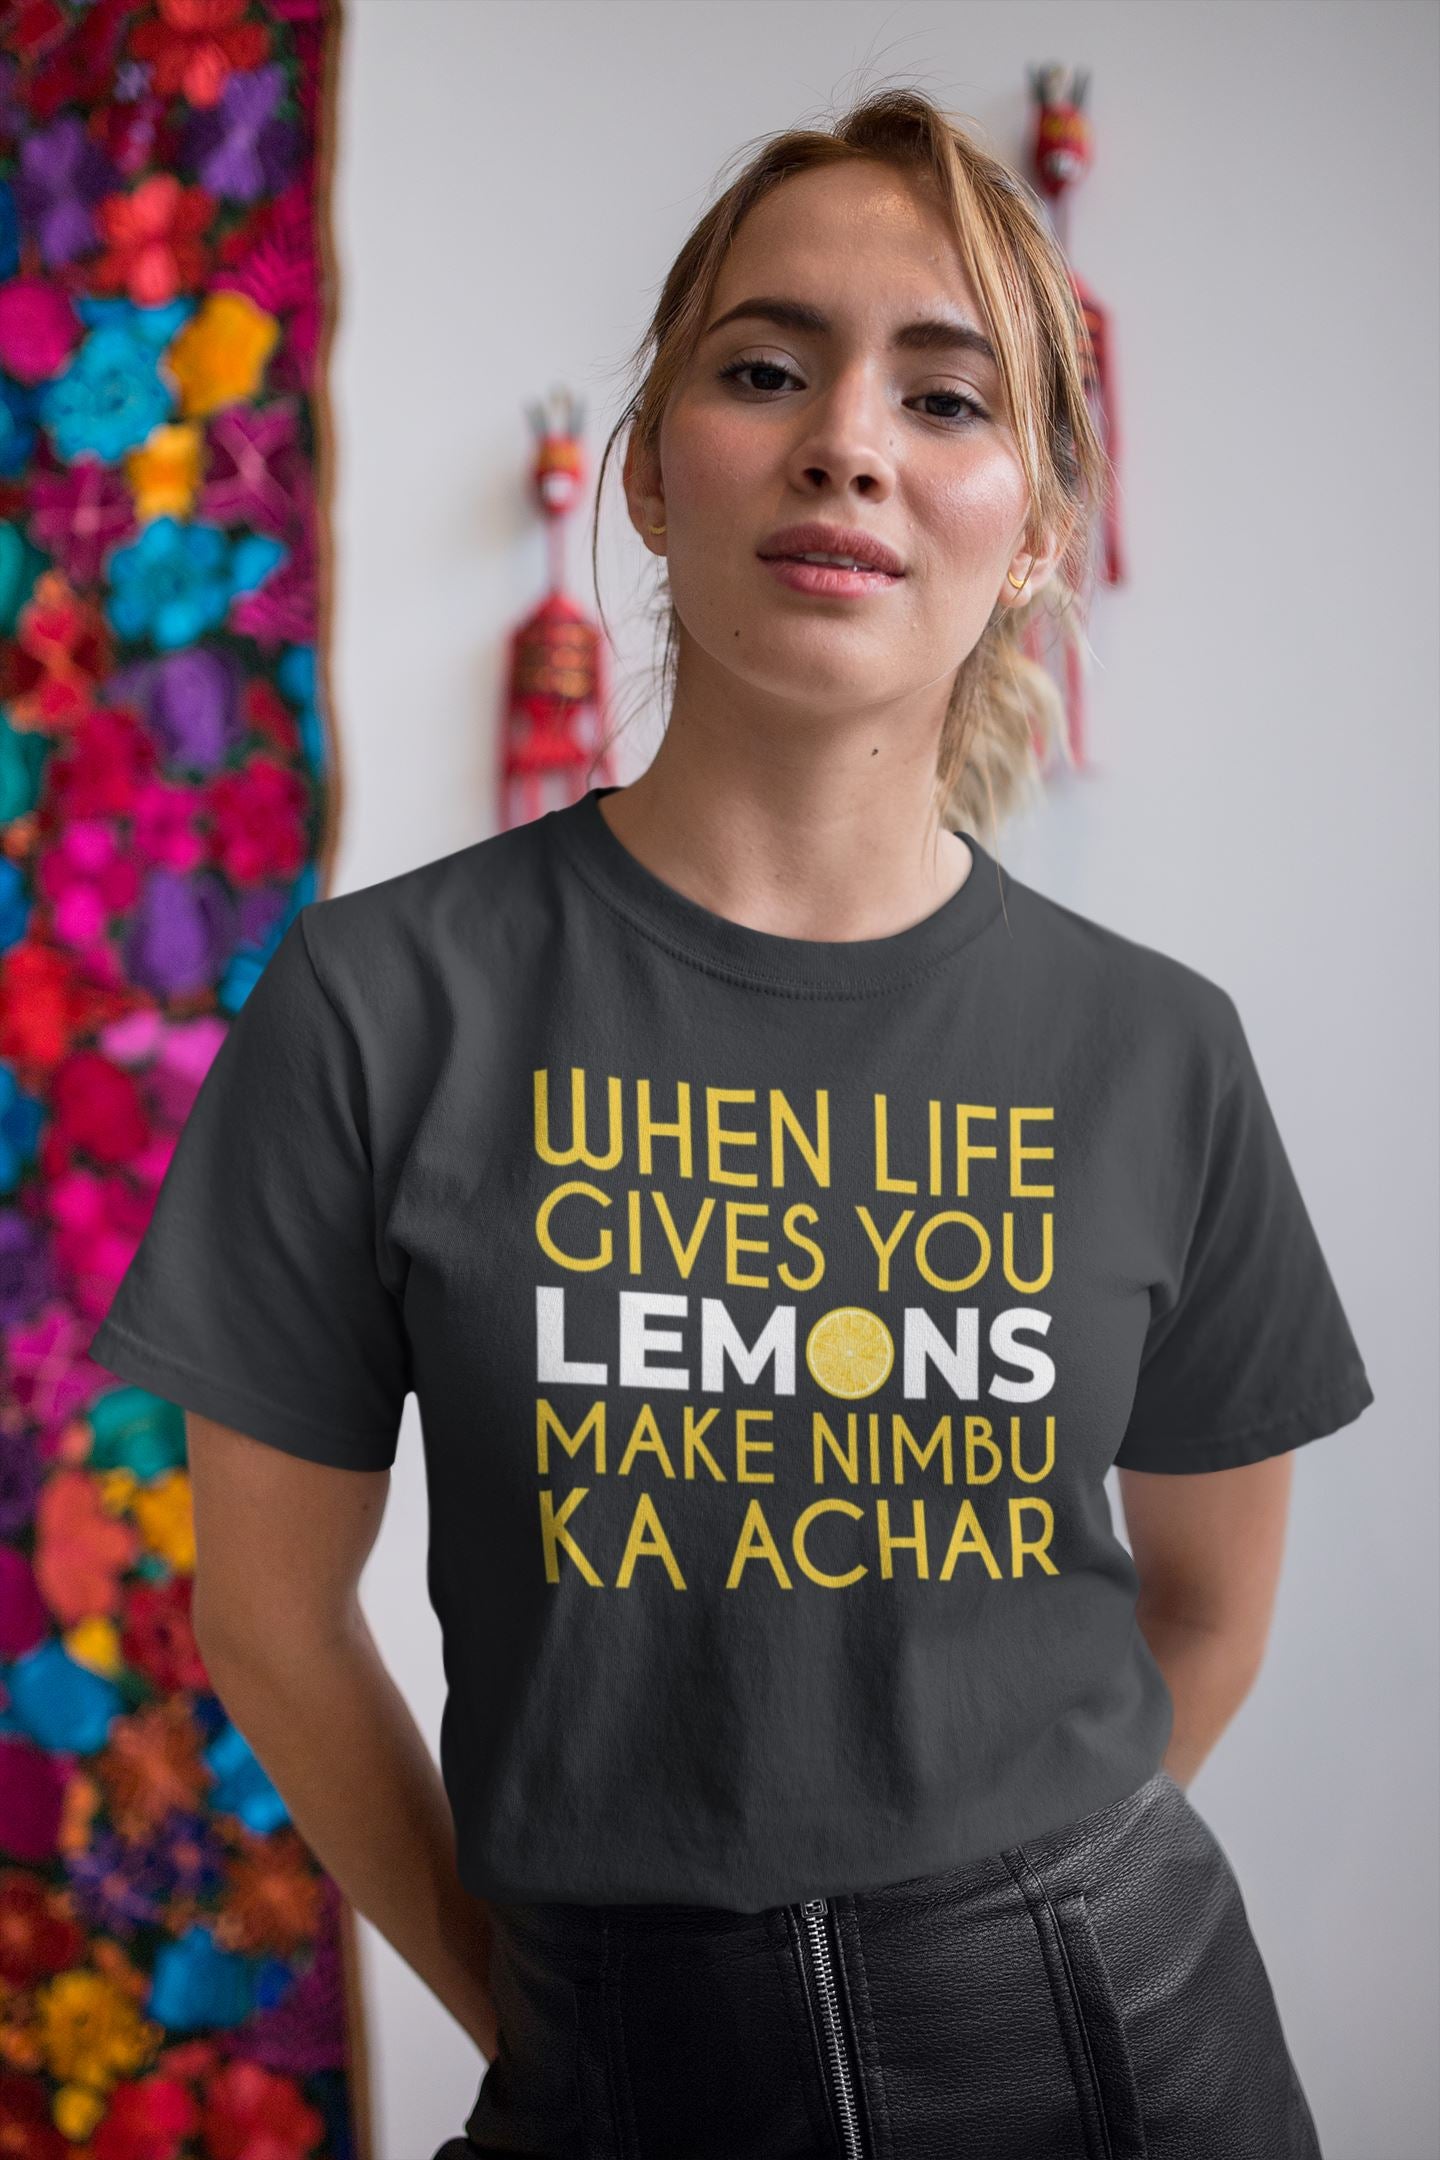 When Life gives you Lemons Make Nimbu ka Achar Funny Black T Shirt for Men and Women freeshipping - Catch My Drift India